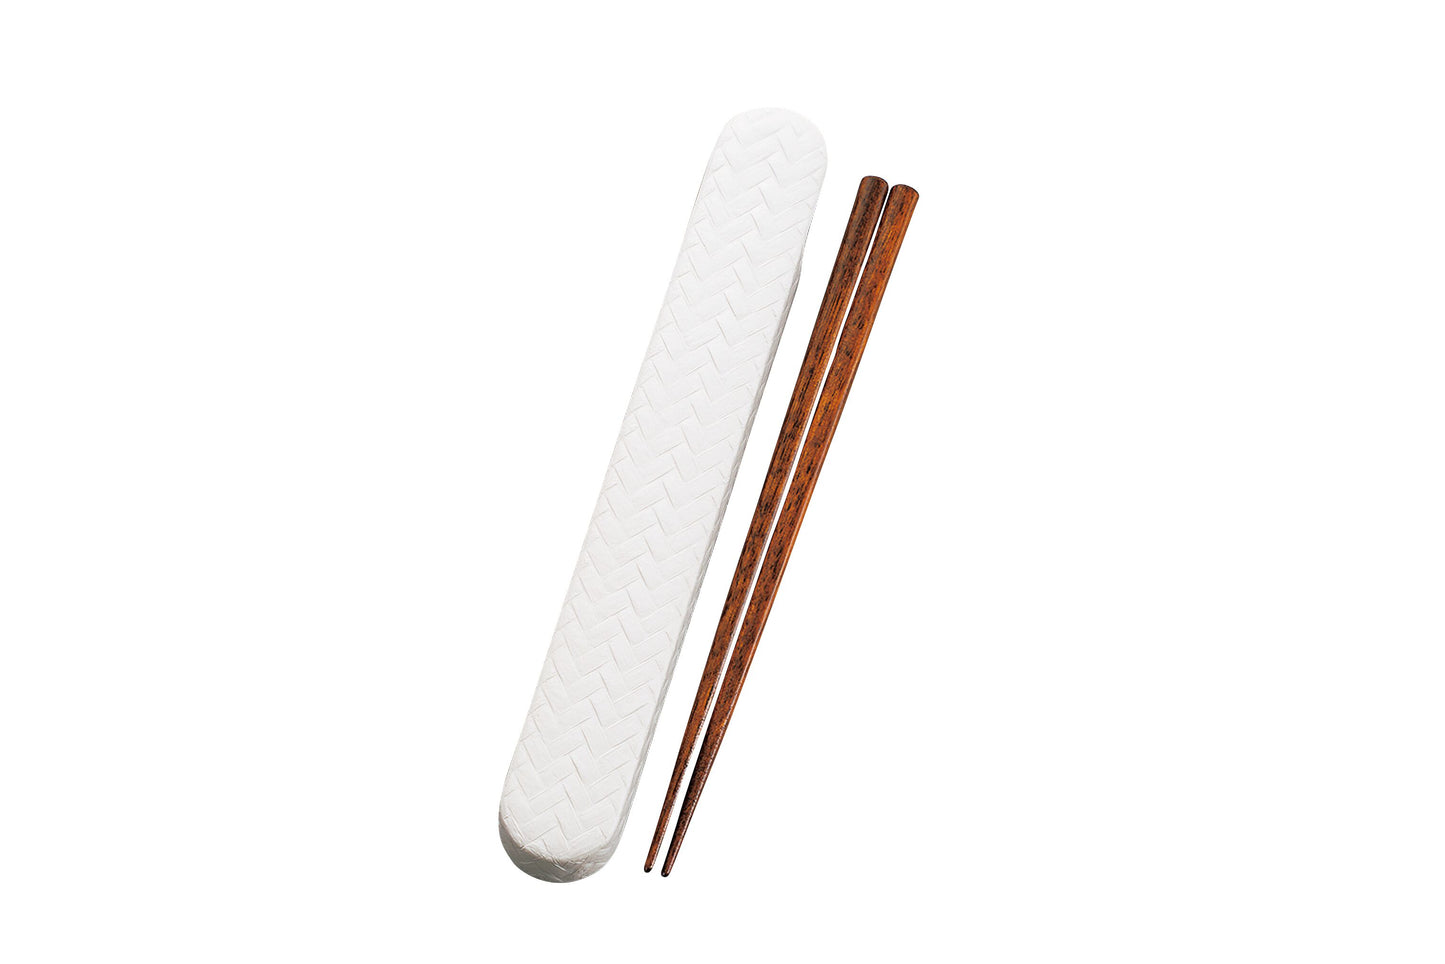 Nuri Ajiro Retro Chopsticks | White by Hakoya - Bento&co Japanese Bento Lunch Boxes and Kitchenware Specialists